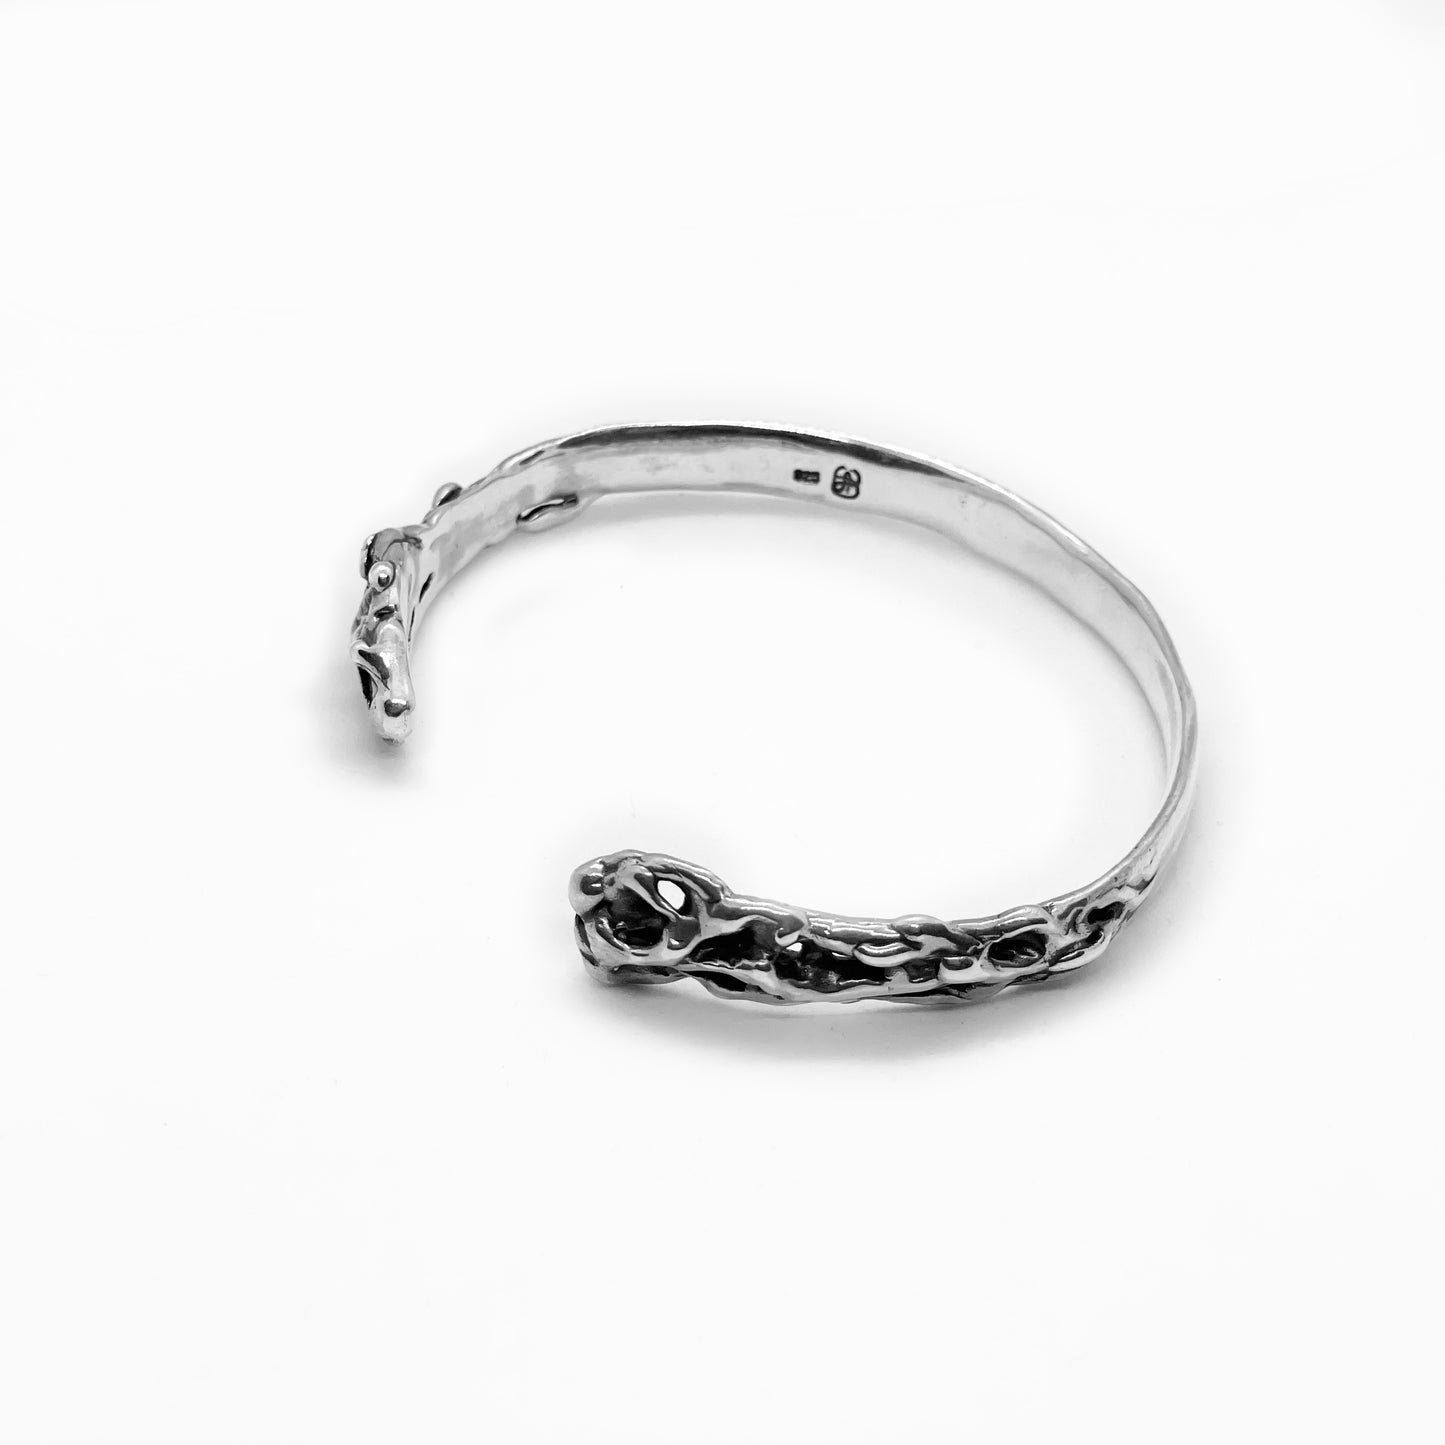 Spiritual Cuff Bracelet - Designer Jewelry - Statement Cuff Bracelet - Sterling Silver Cuff Bracelet - Free Form - Kalypso Cuff Bracelet